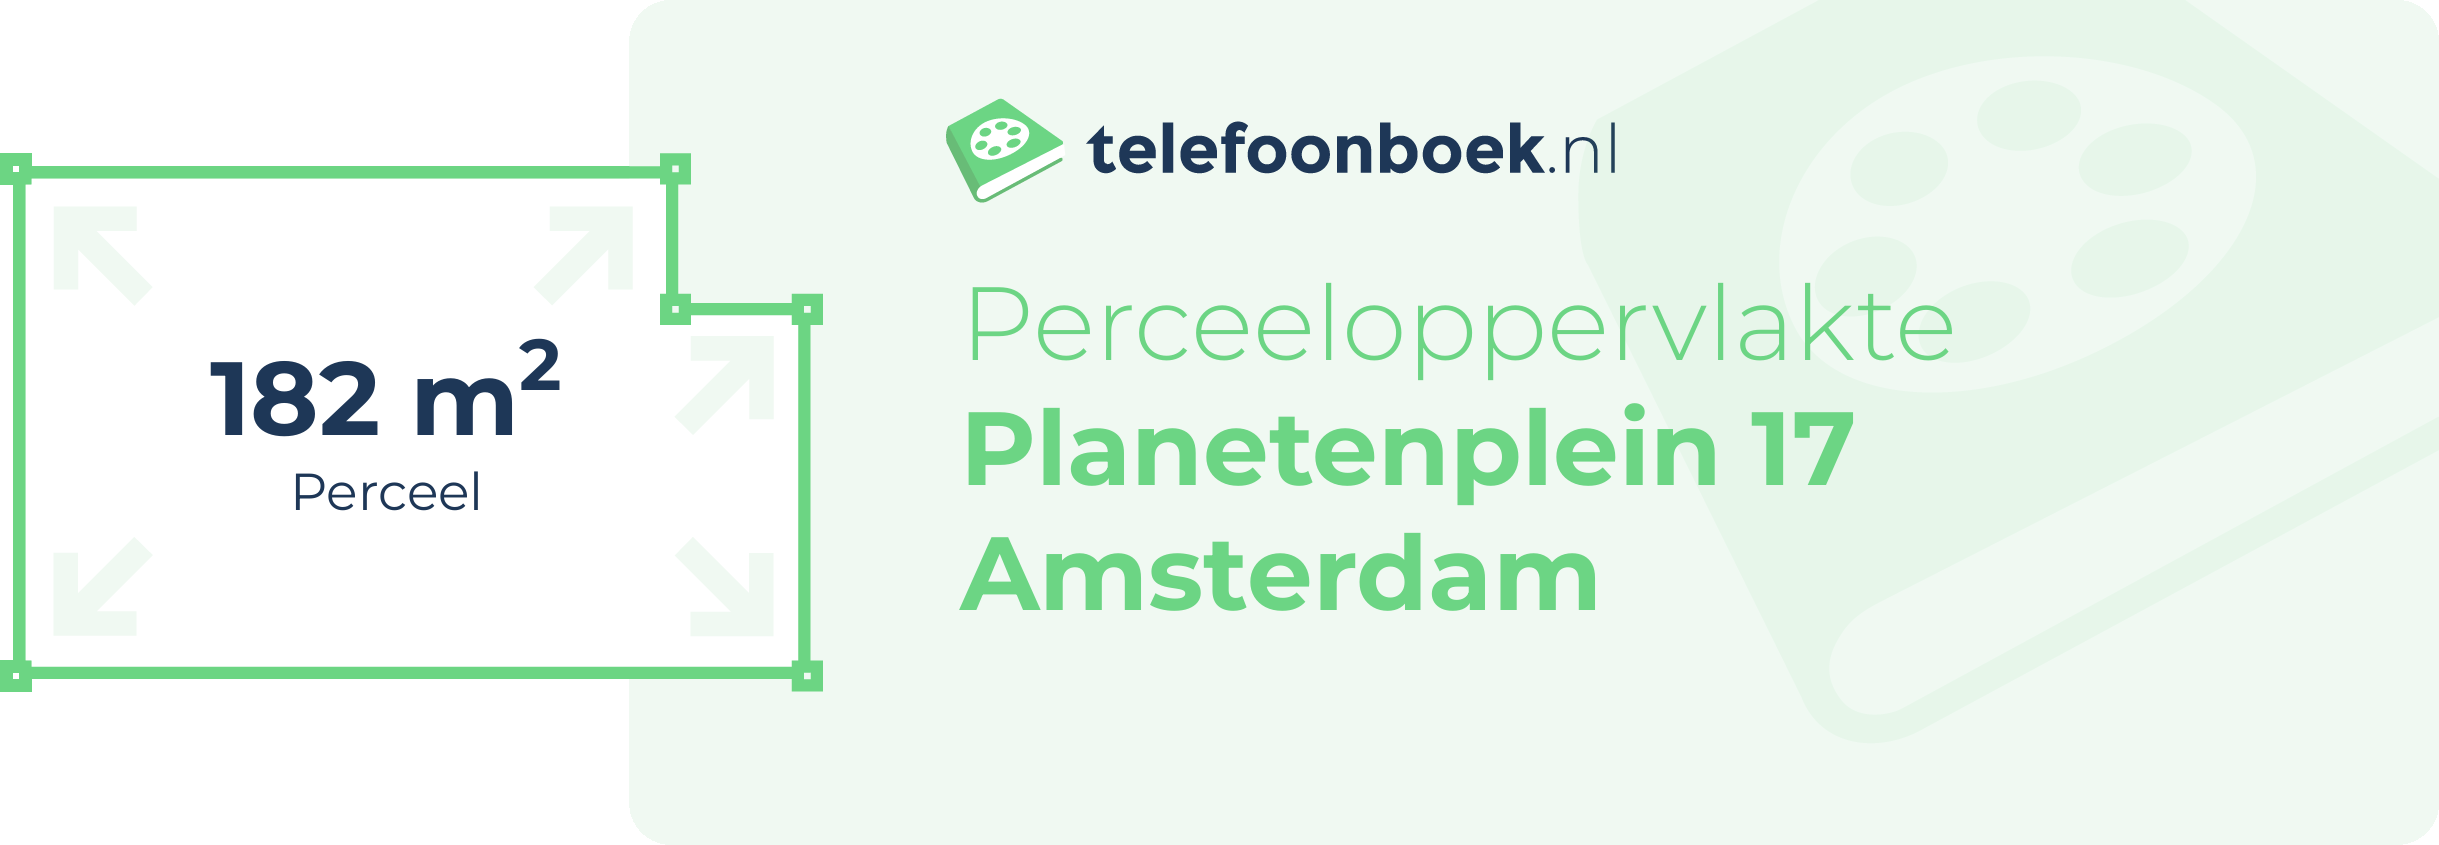 Perceeloppervlakte Planetenplein 17 Amsterdam